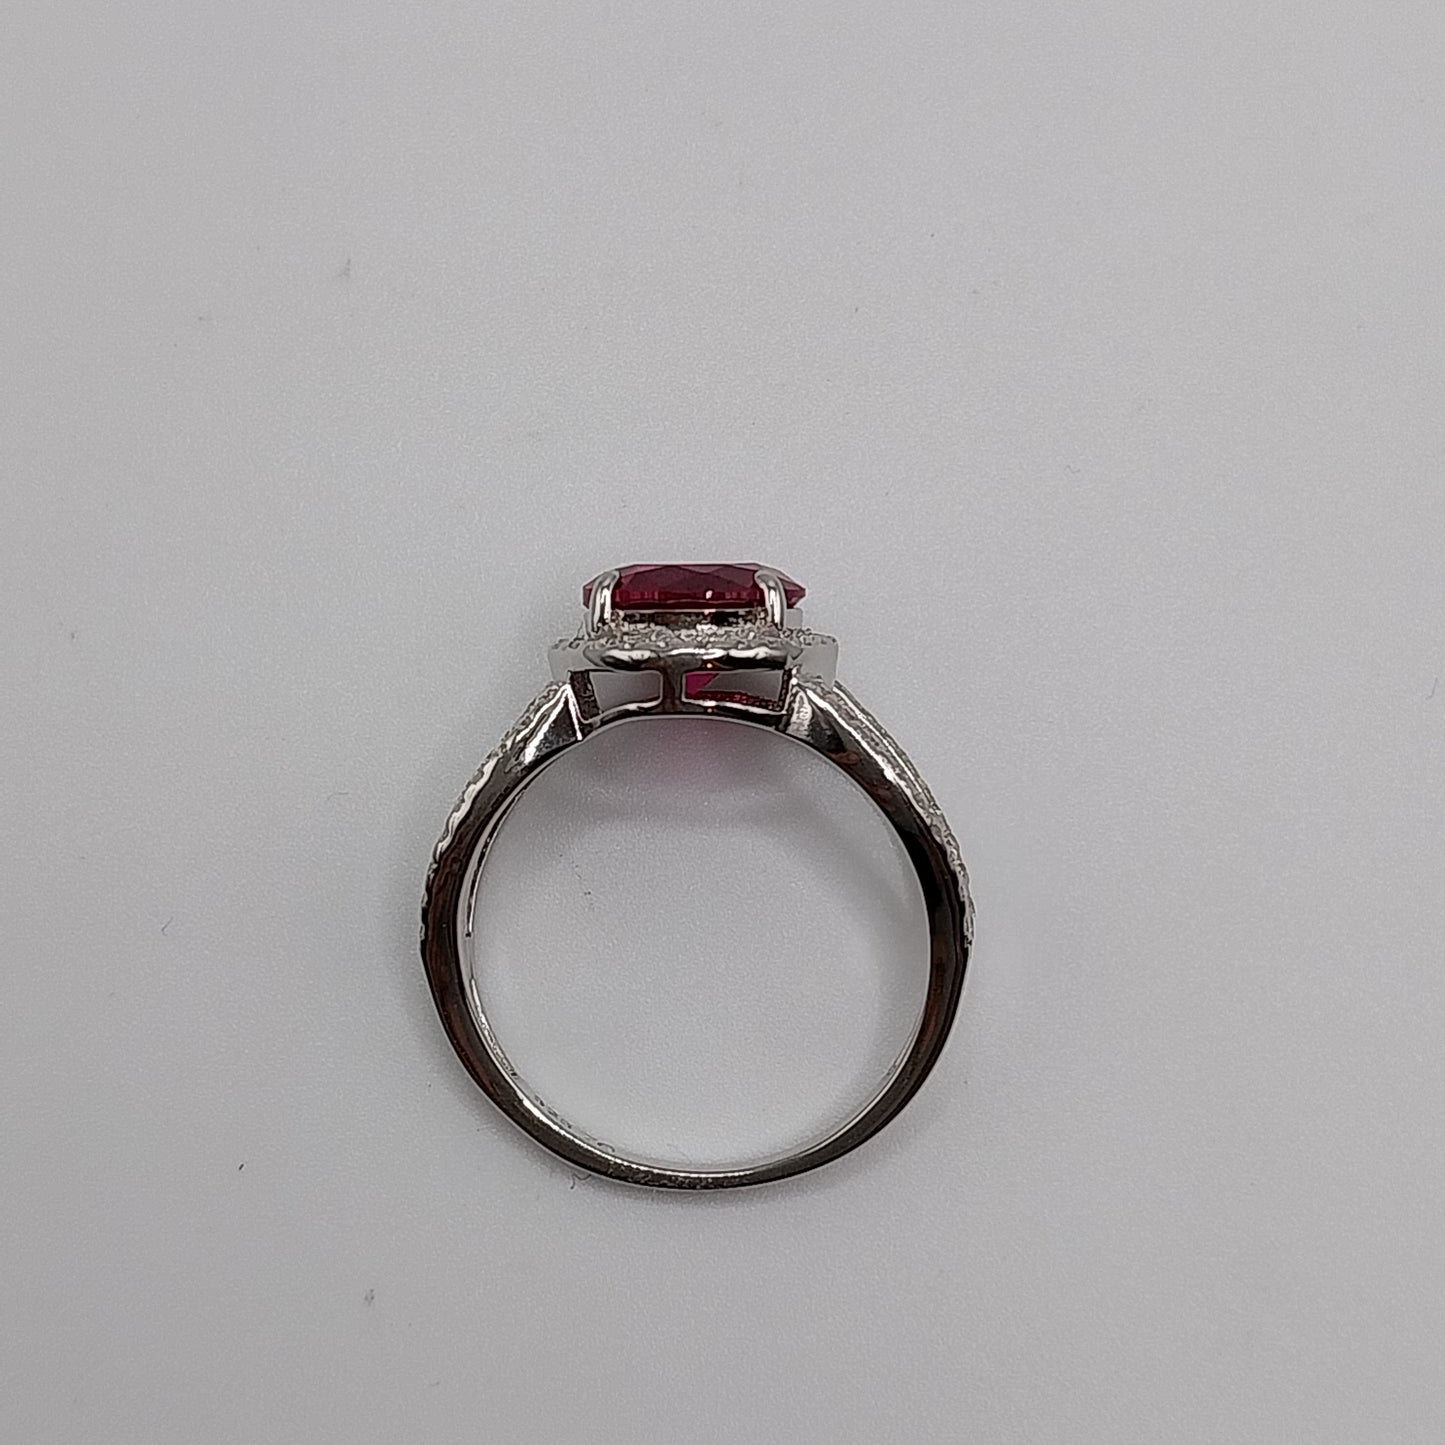 Piedra redonda de rubí creada en laboratorio con anillo de plata .925 con circonita cúbica